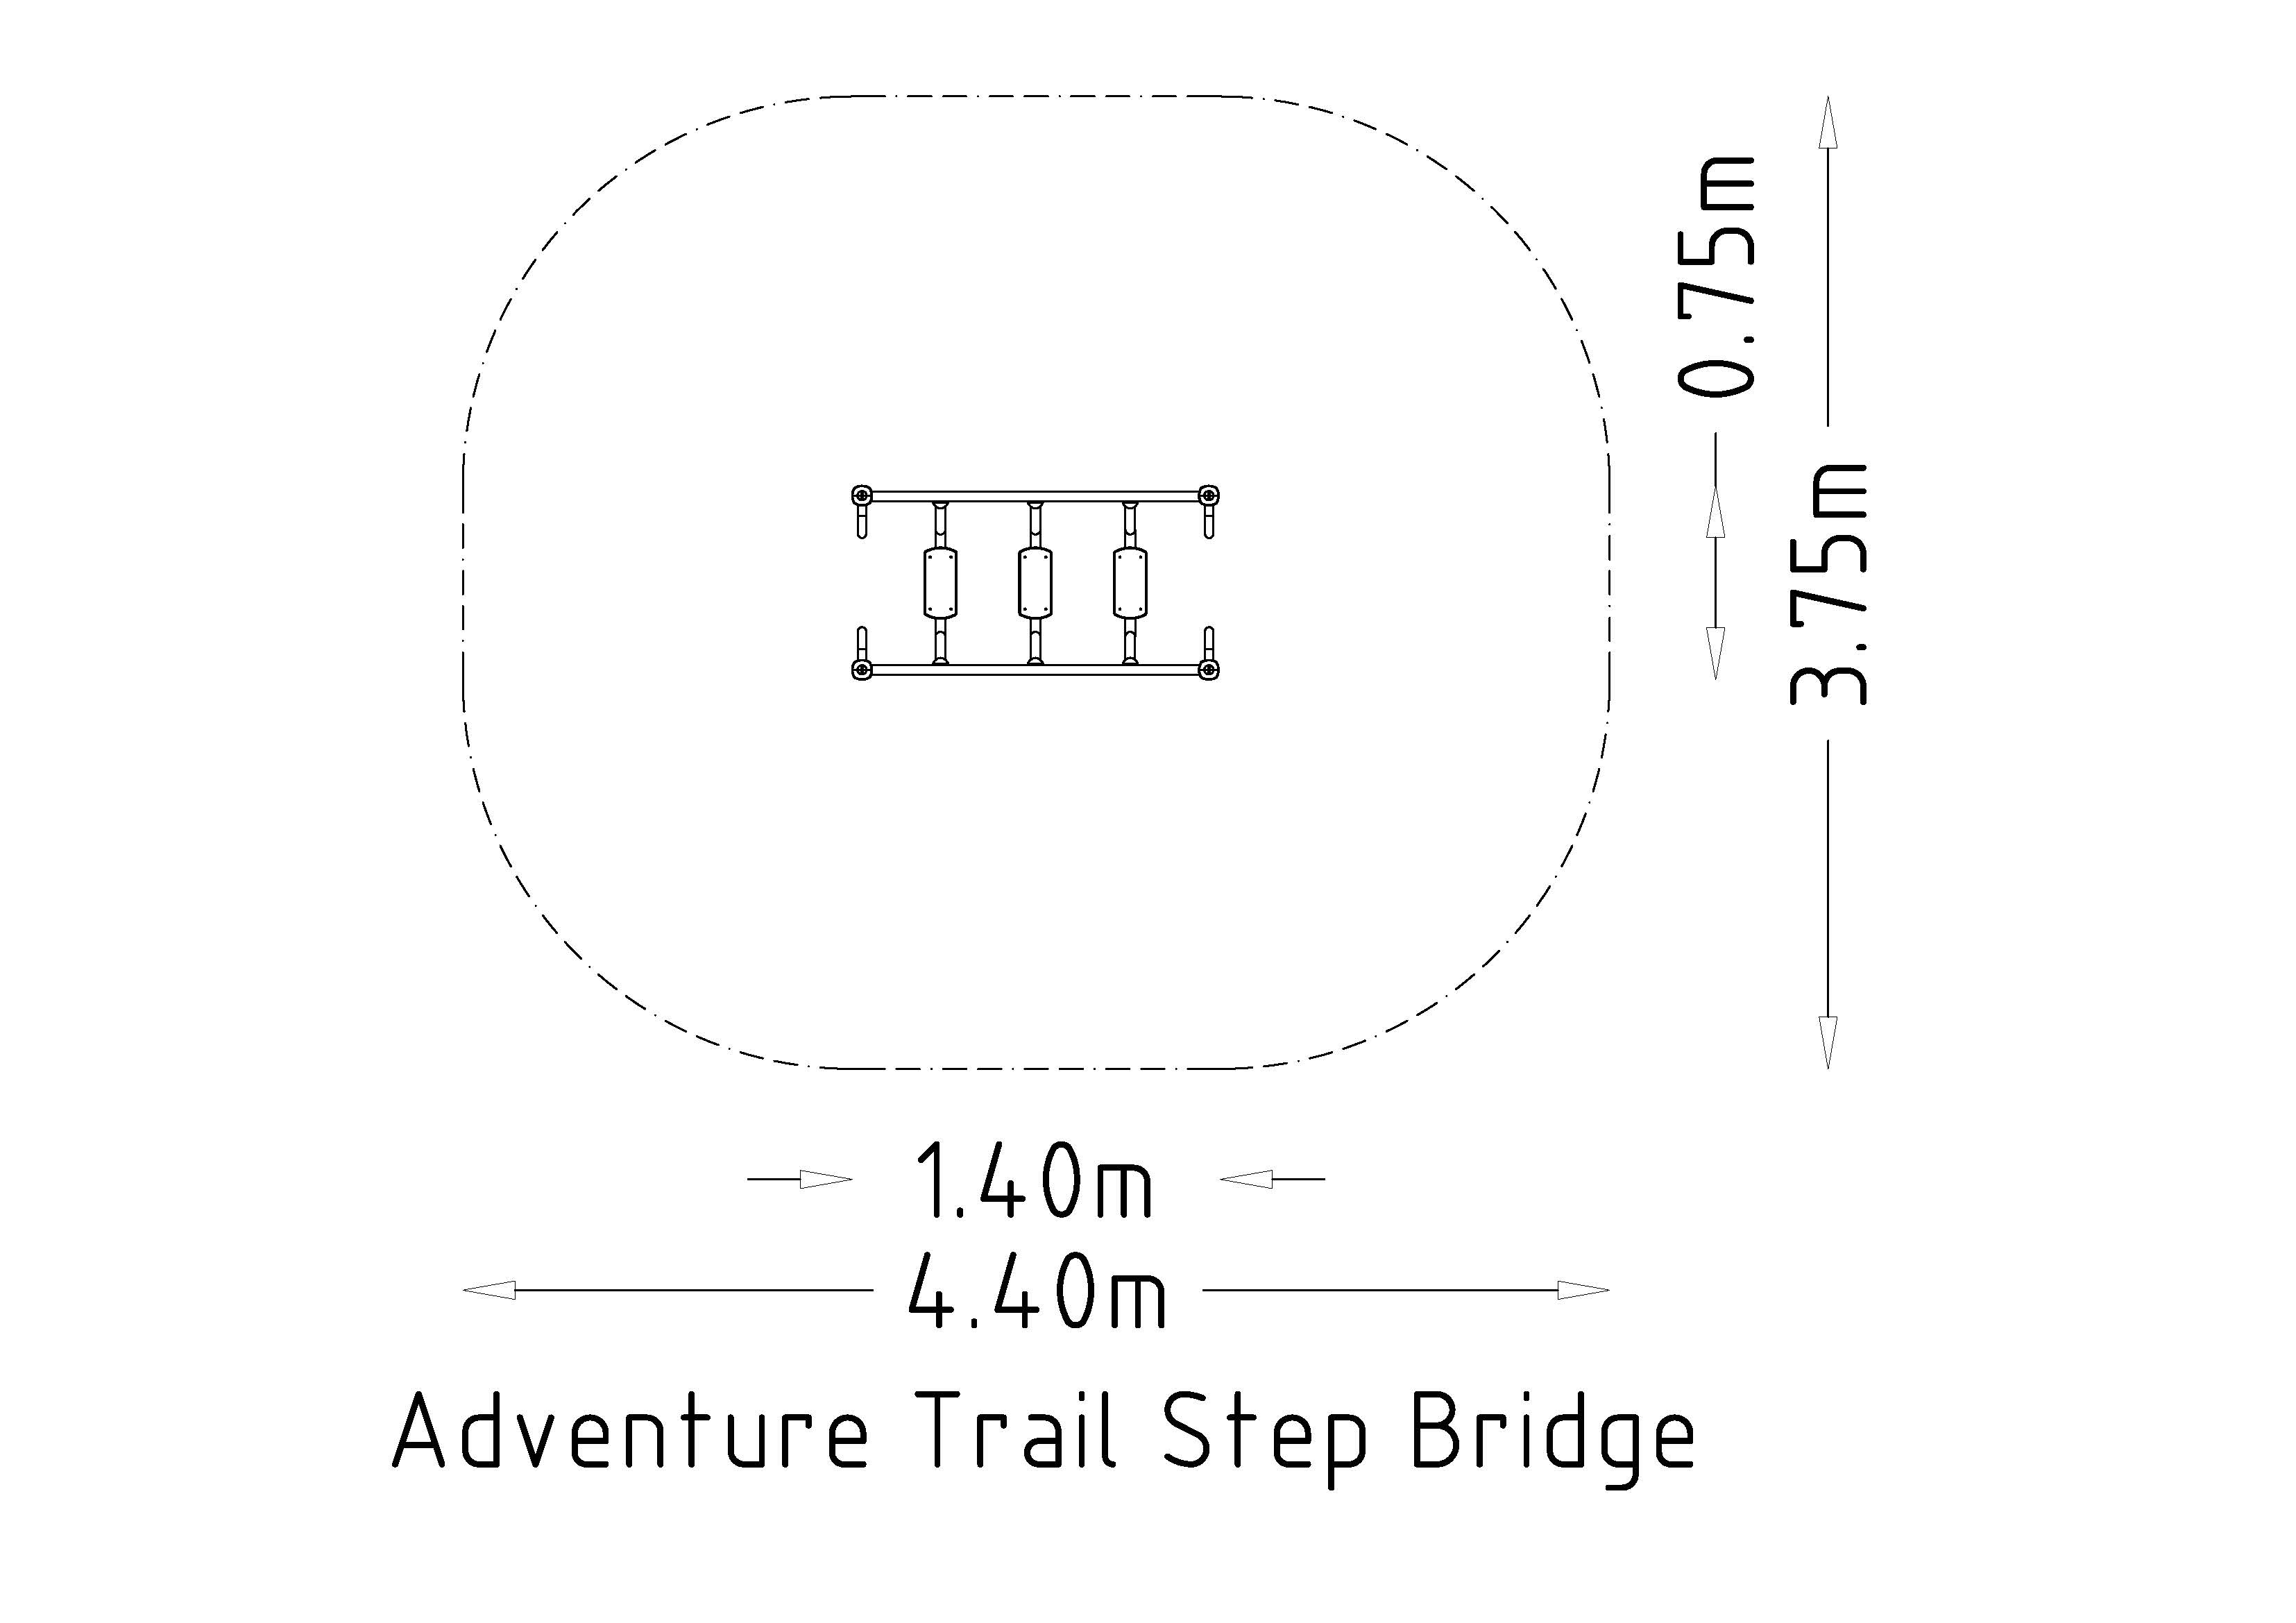 Adventure Trail Step Bridge